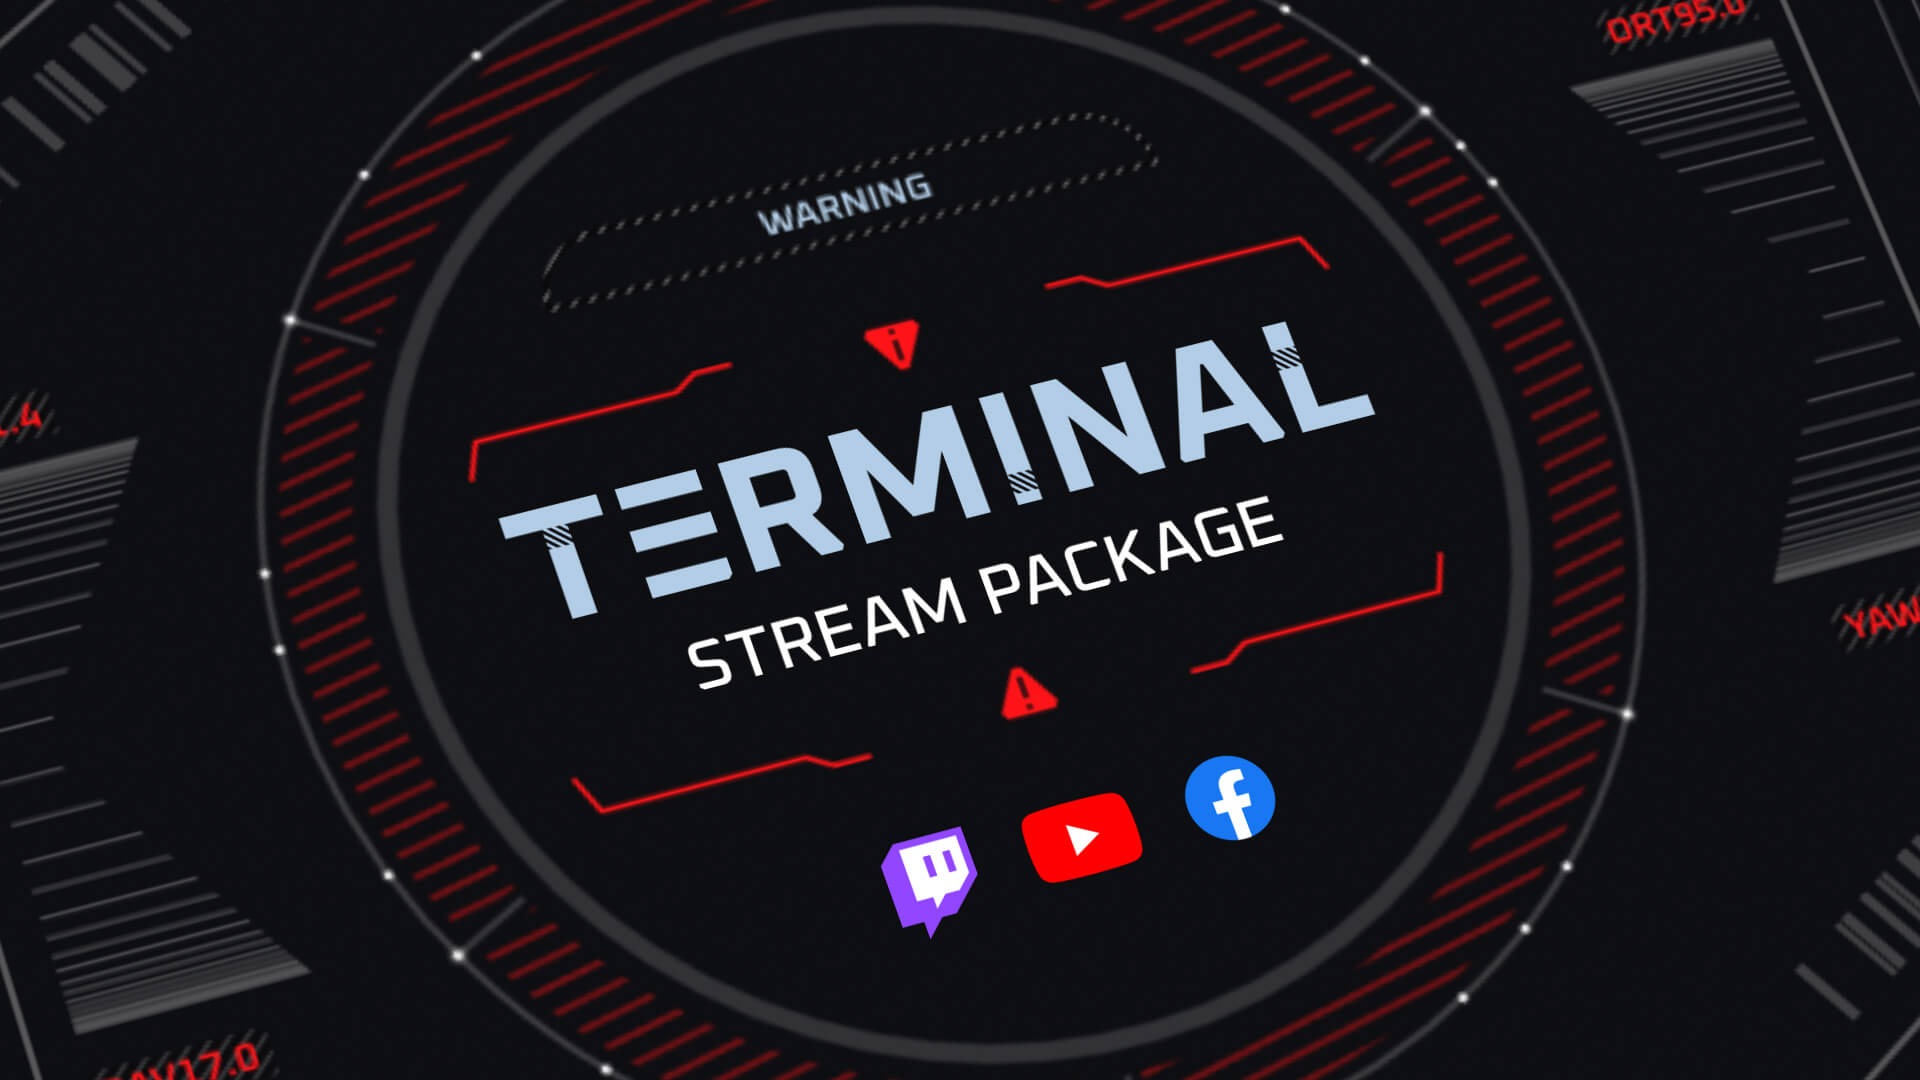 Terminal Stream Package